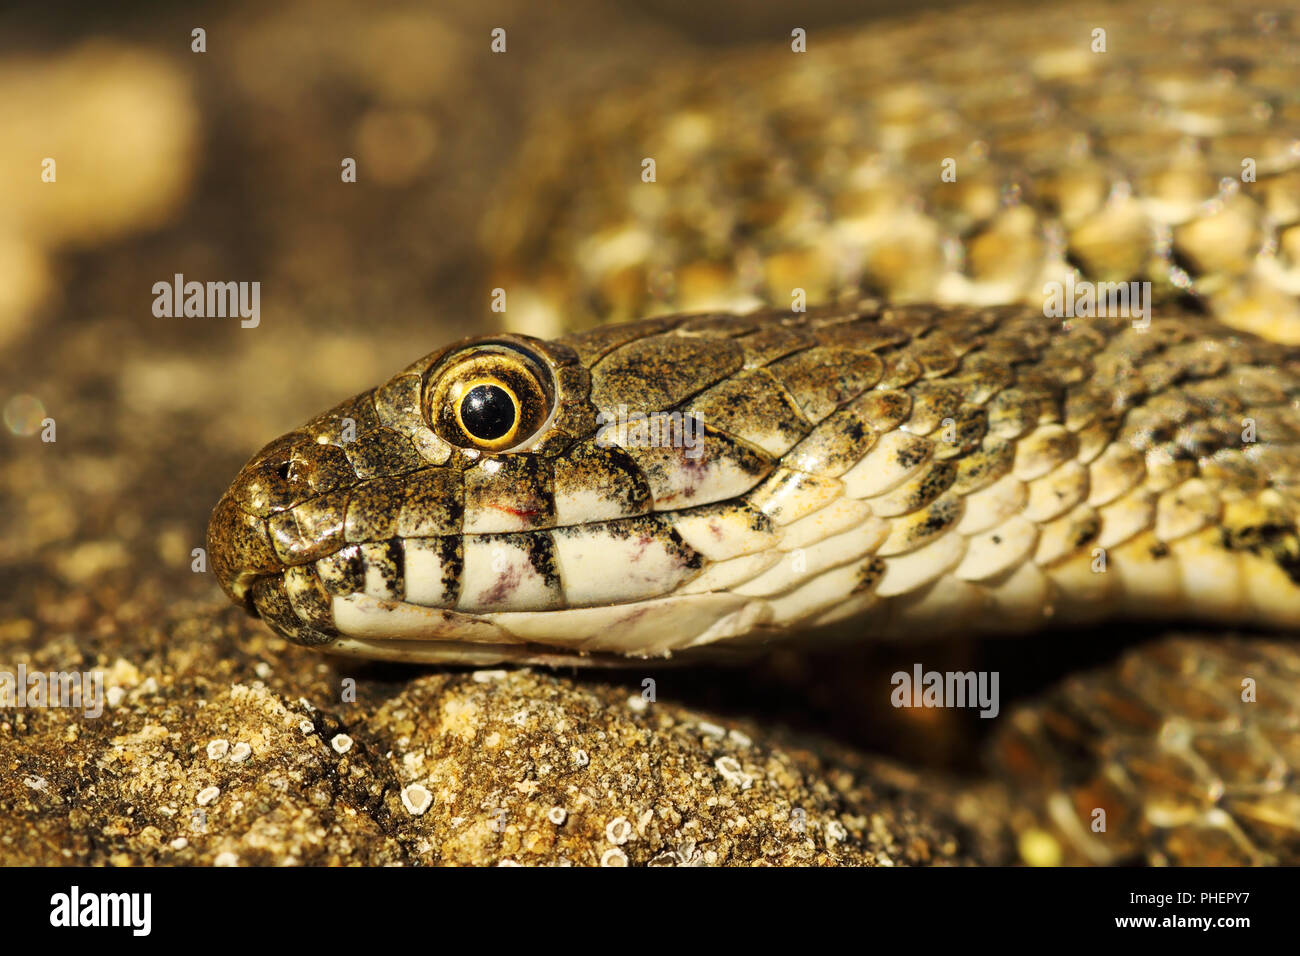 detail of dice snake head ( Natrix tessellata ) Stock Photo